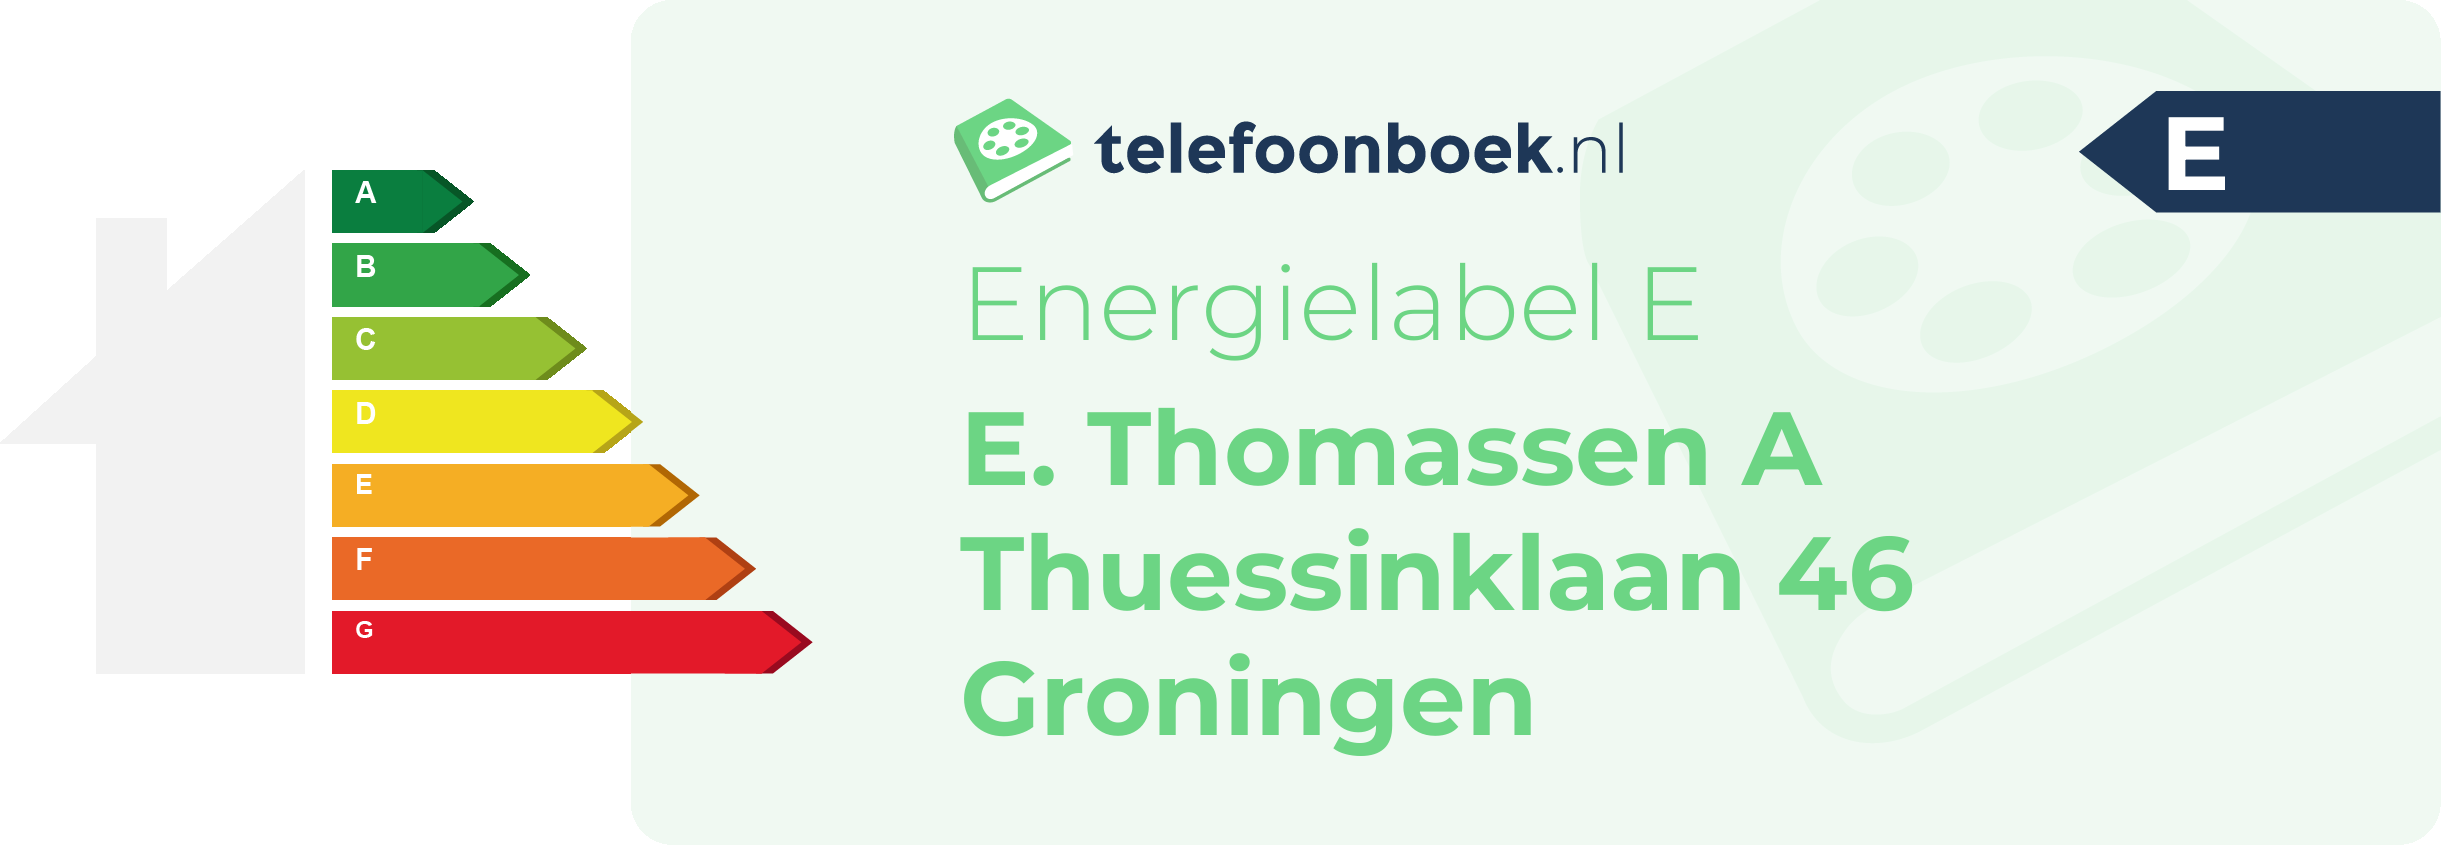 Energielabel E. Thomassen A Thuessinklaan 46 Groningen